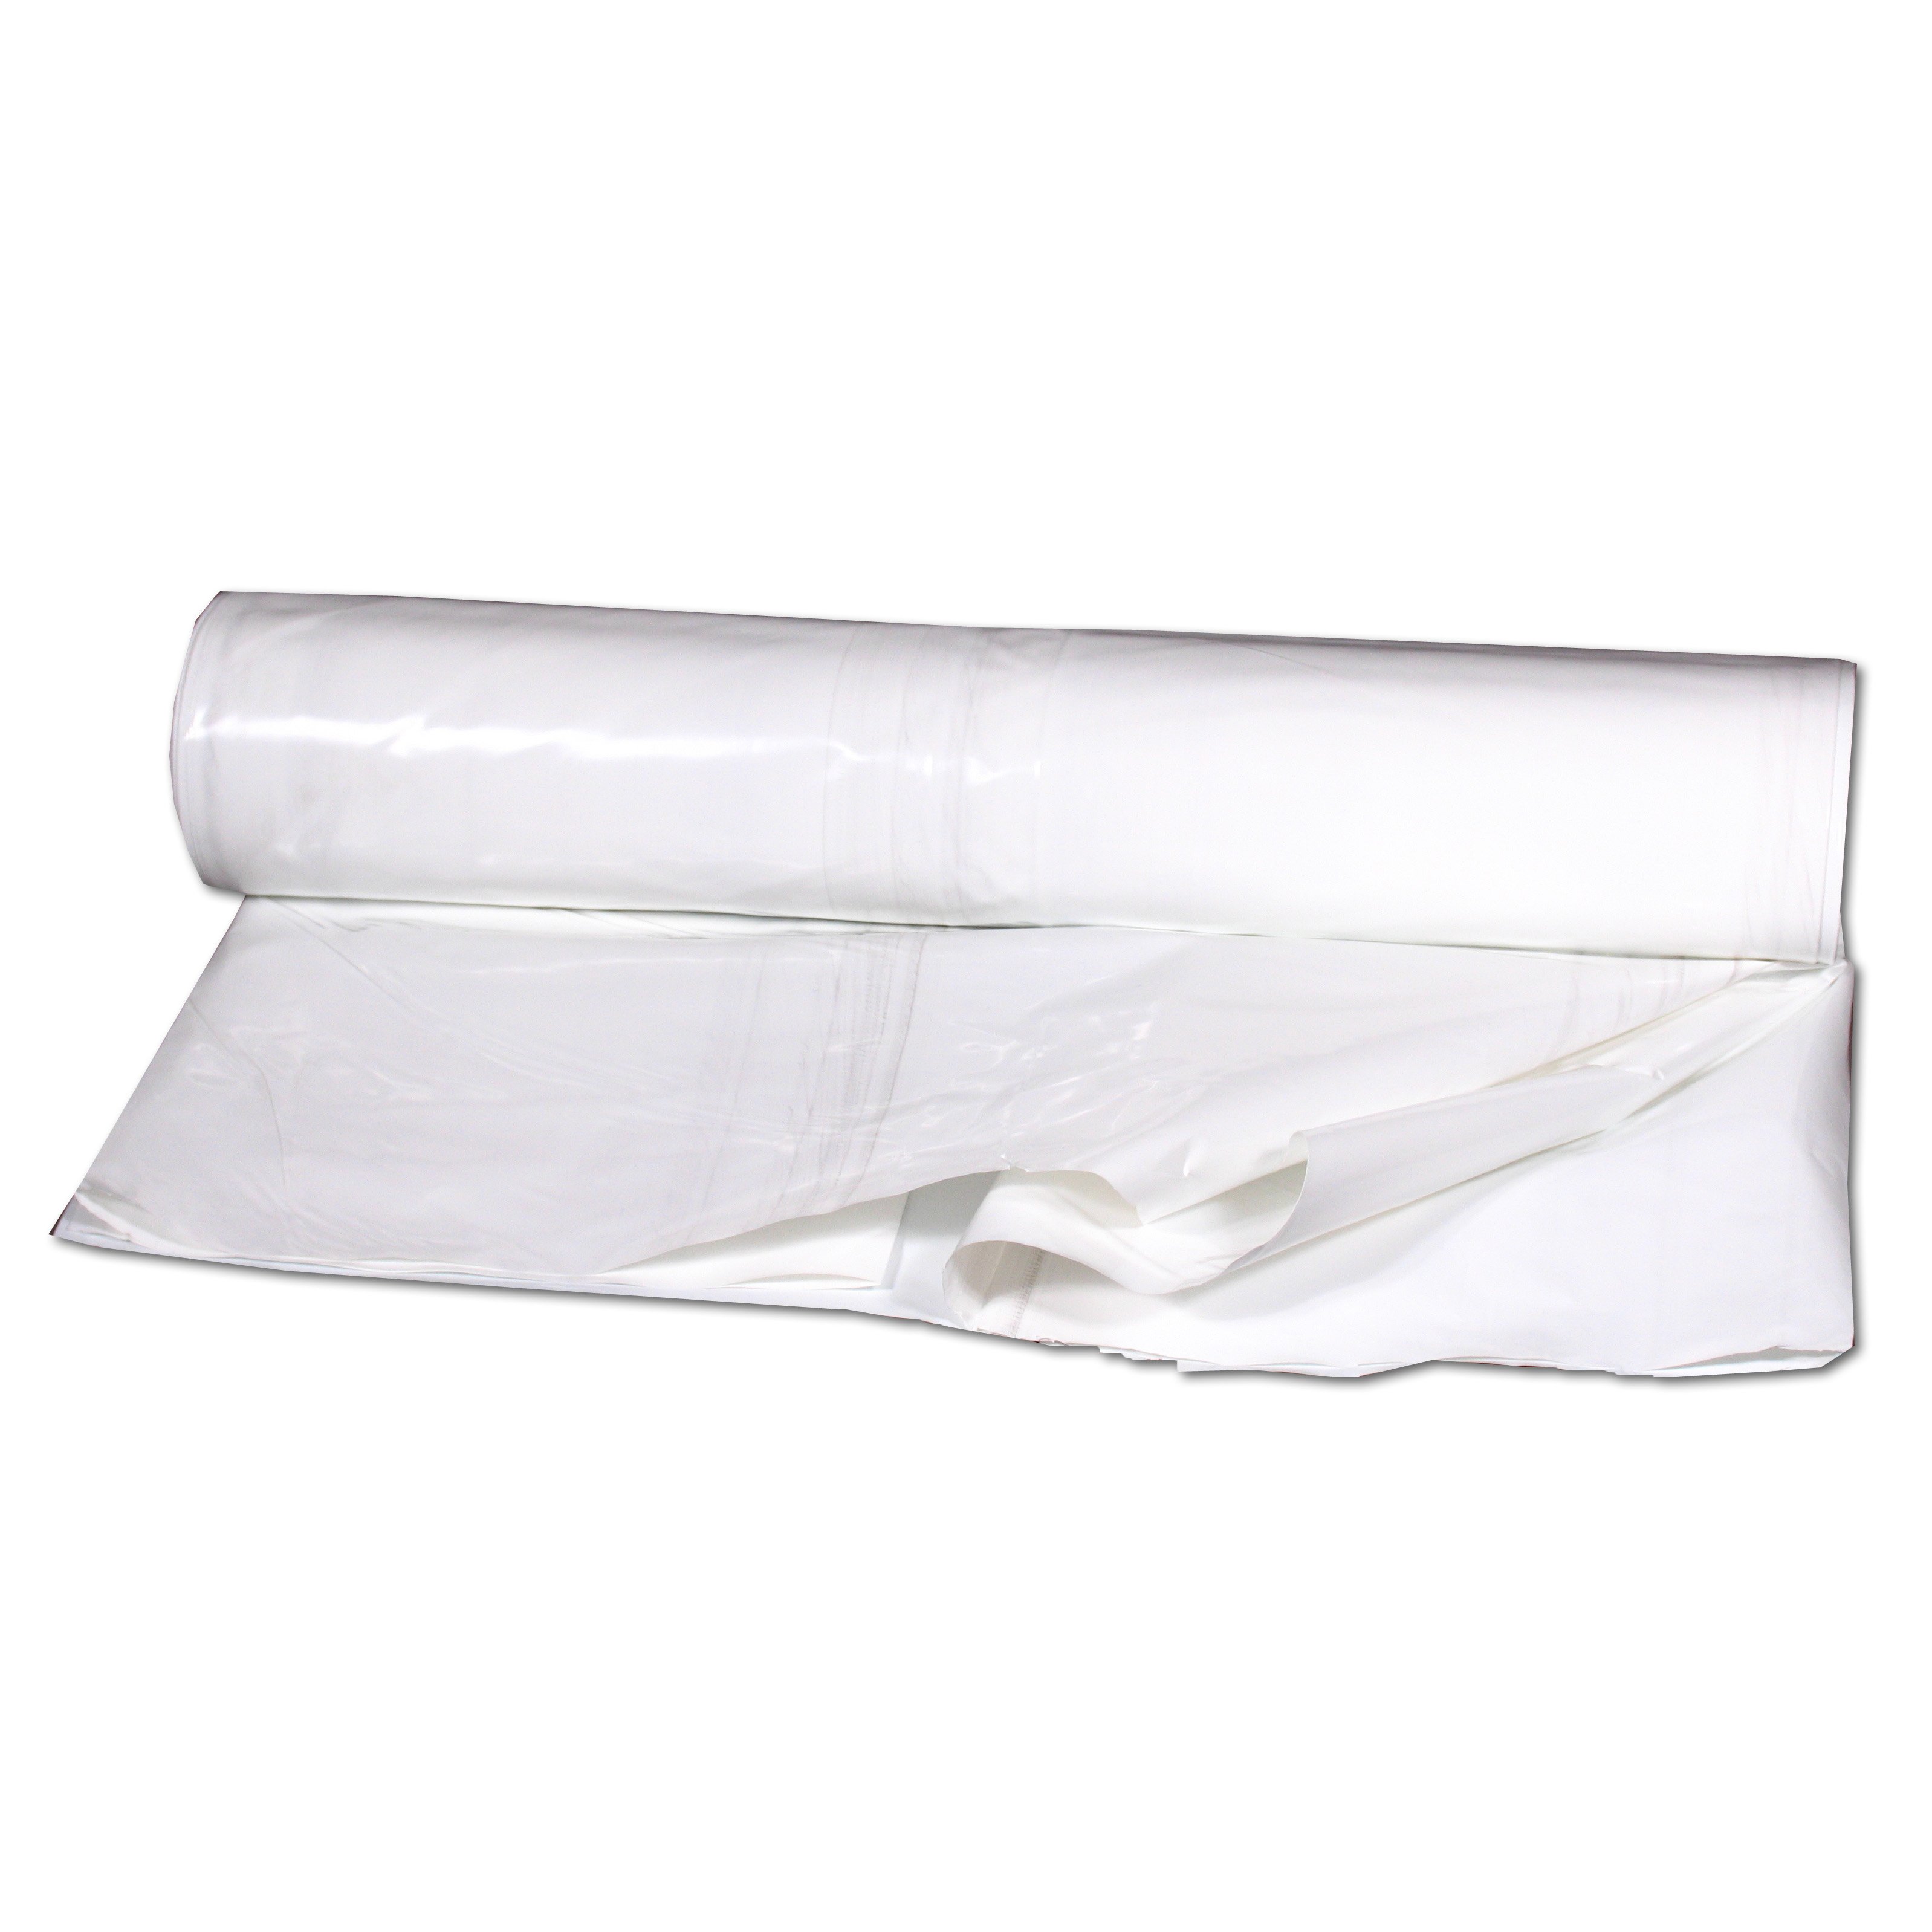 White underlaying foil FLOOR SECURE, 4x1m